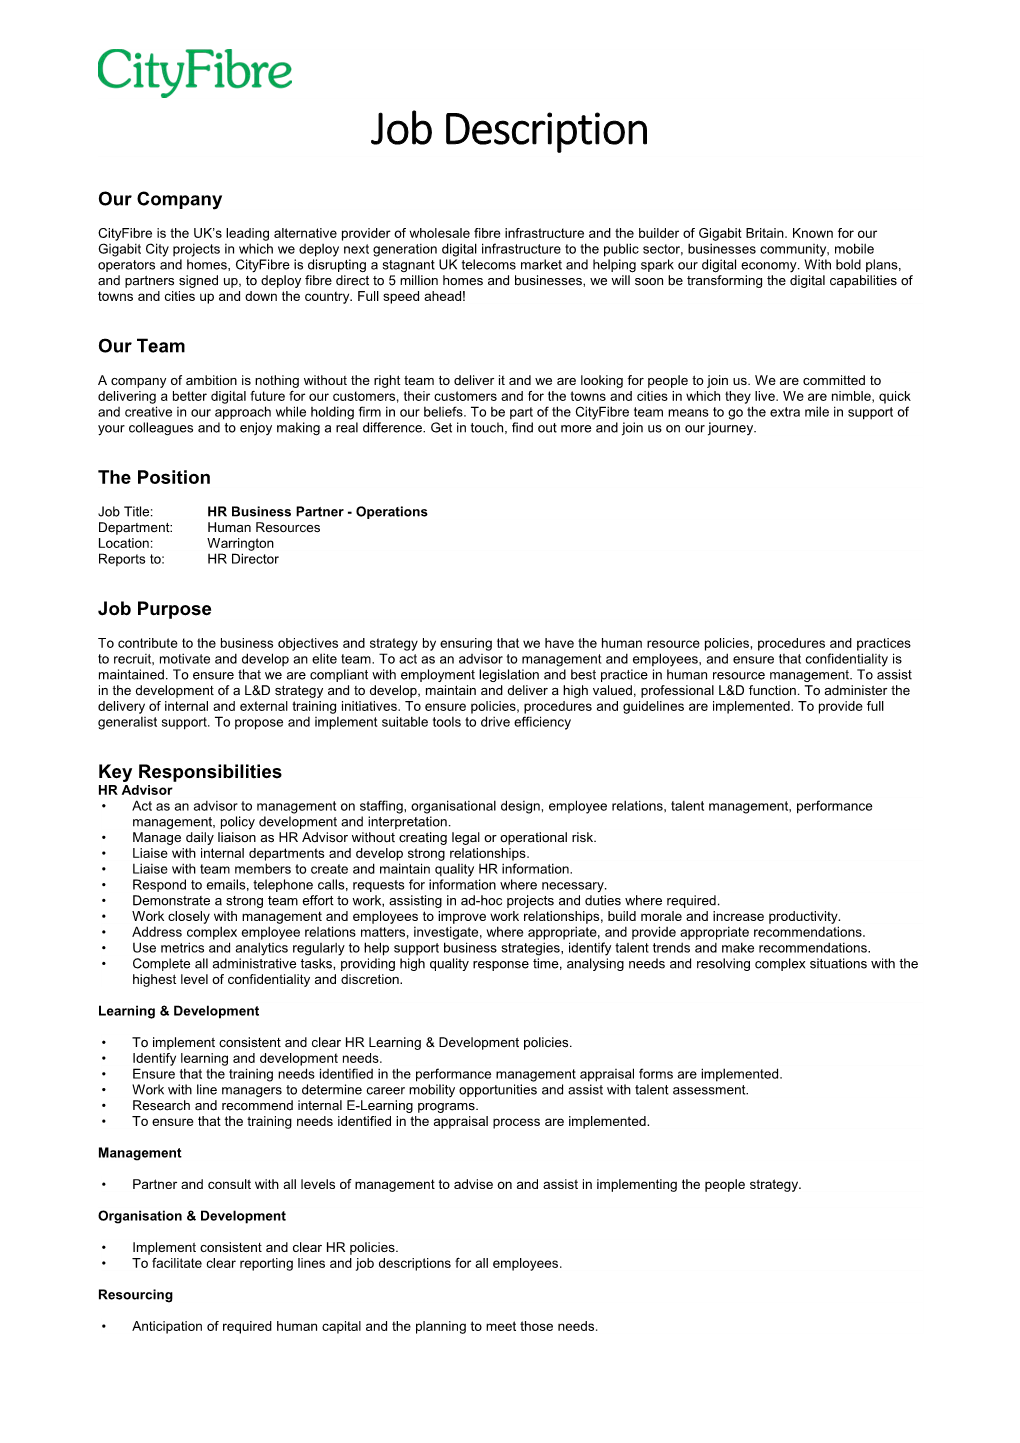 Job Title: HR Business Partner - Operations